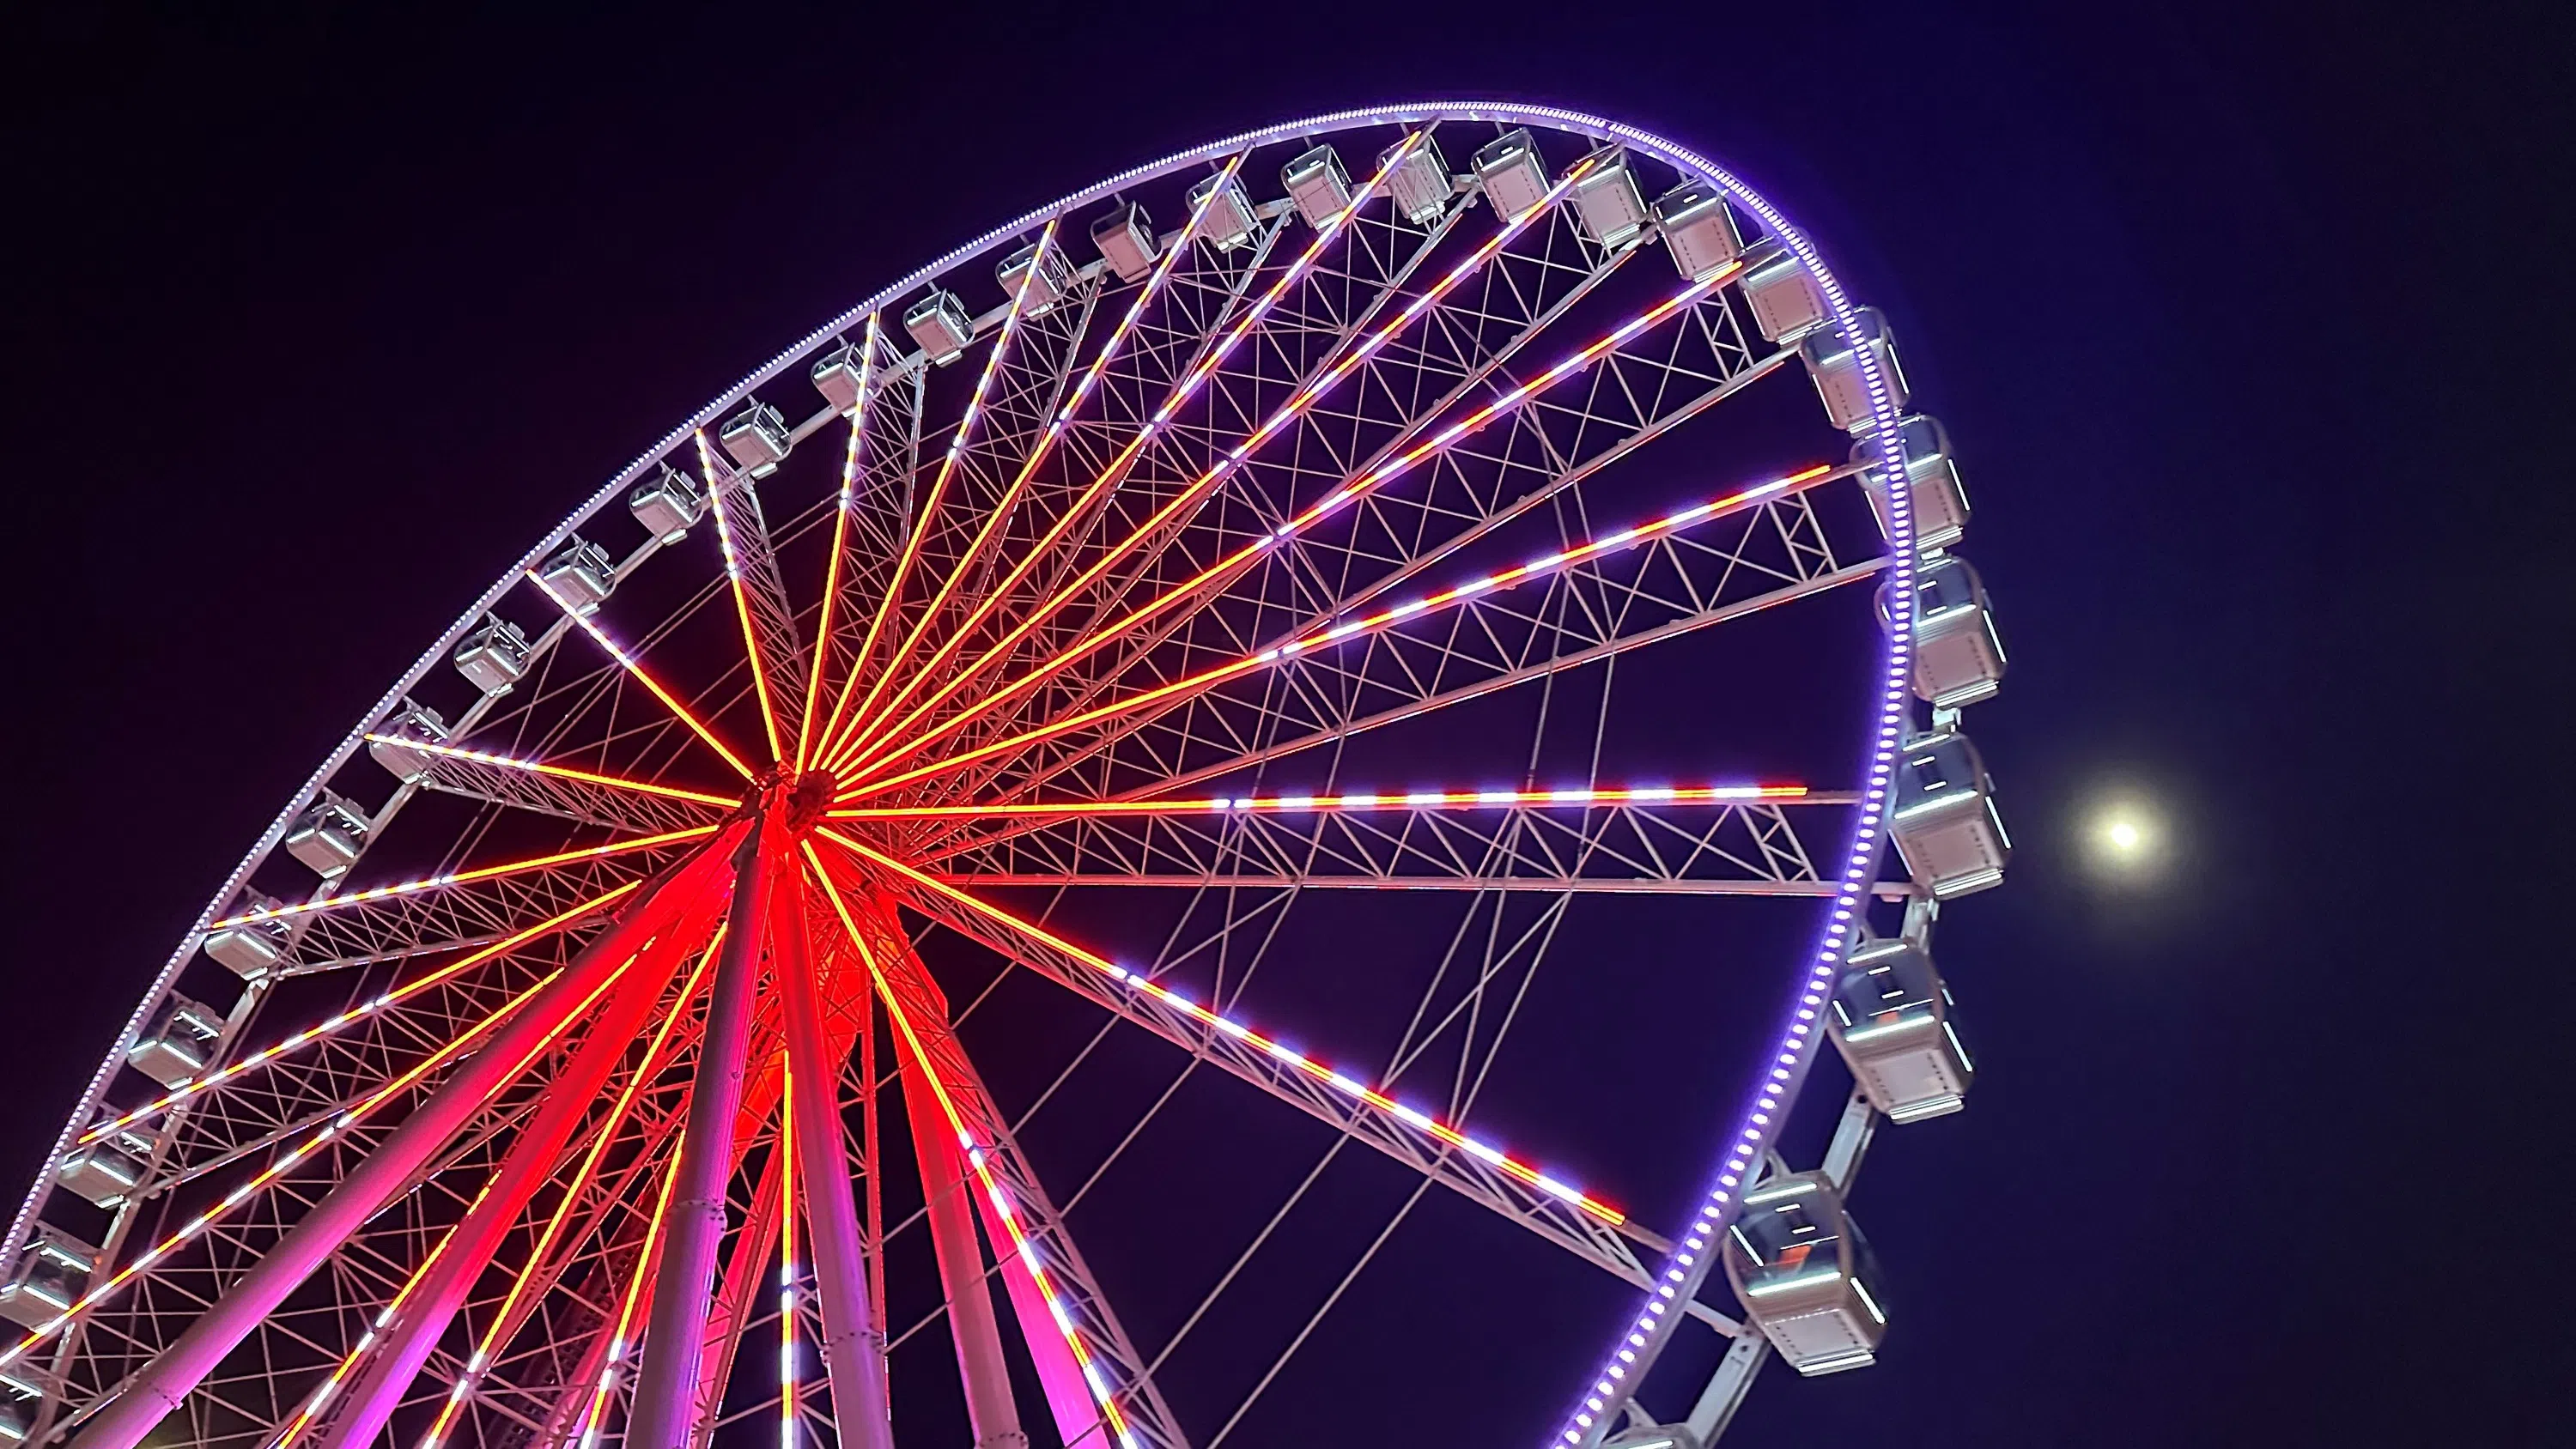 The Ferris Wheel lit up at night